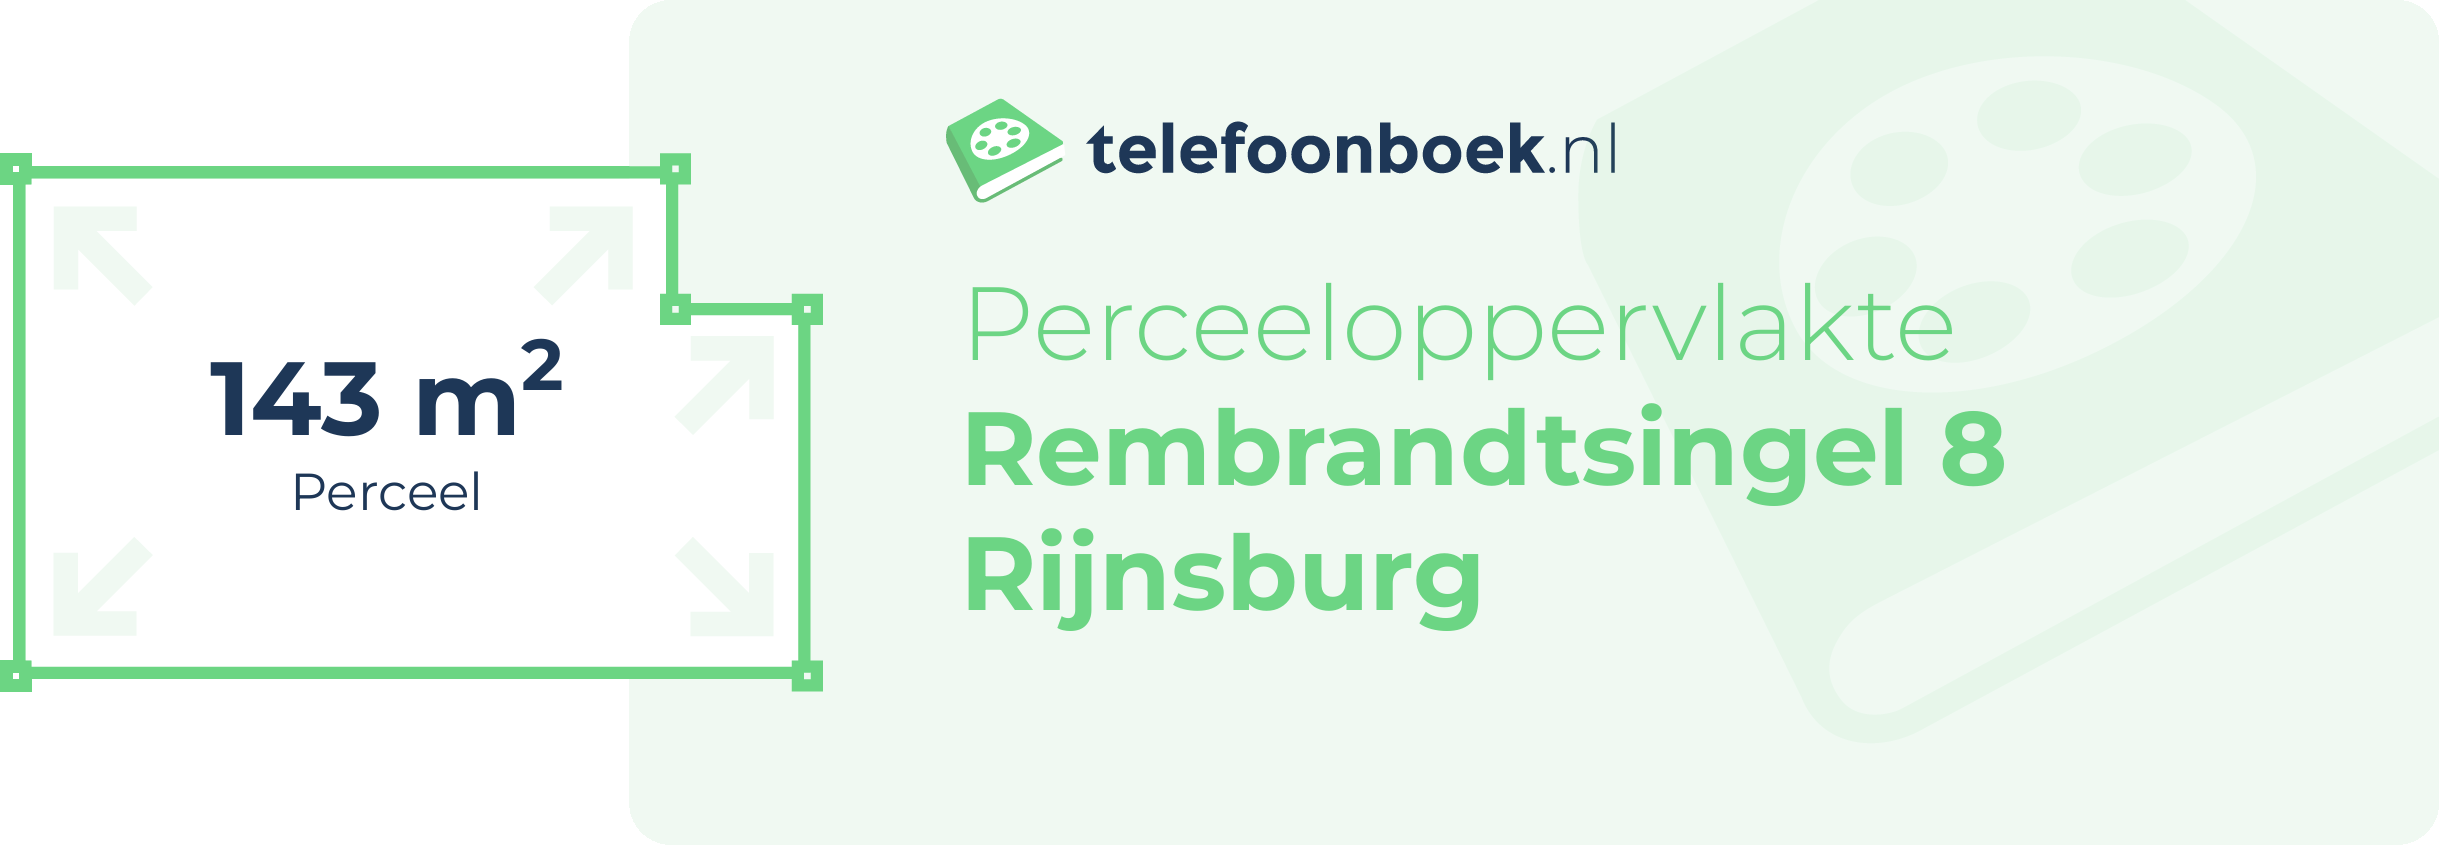 Perceeloppervlakte Rembrandtsingel 8 Rijnsburg